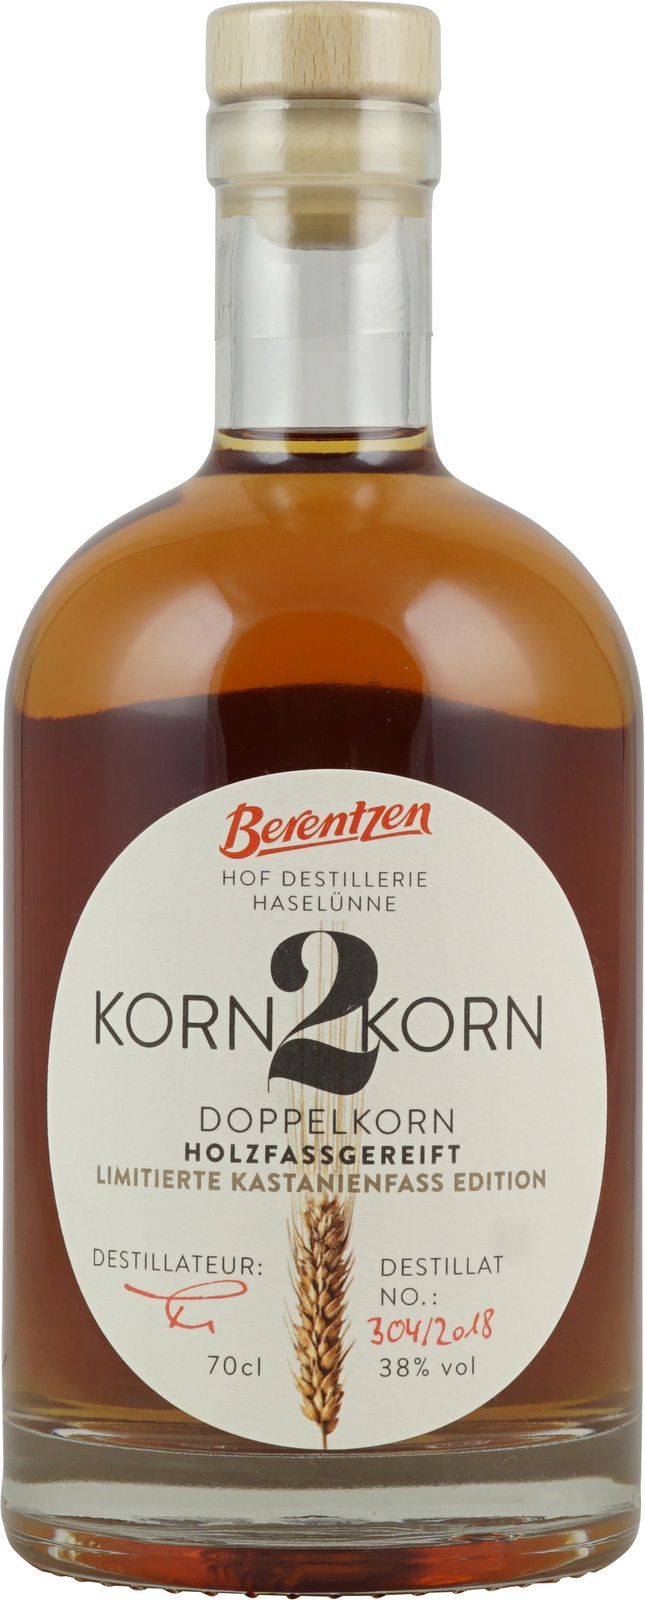 Korn2Korn Kastanie 0,7 Liter 38 % Vol., Doppelkorn im K